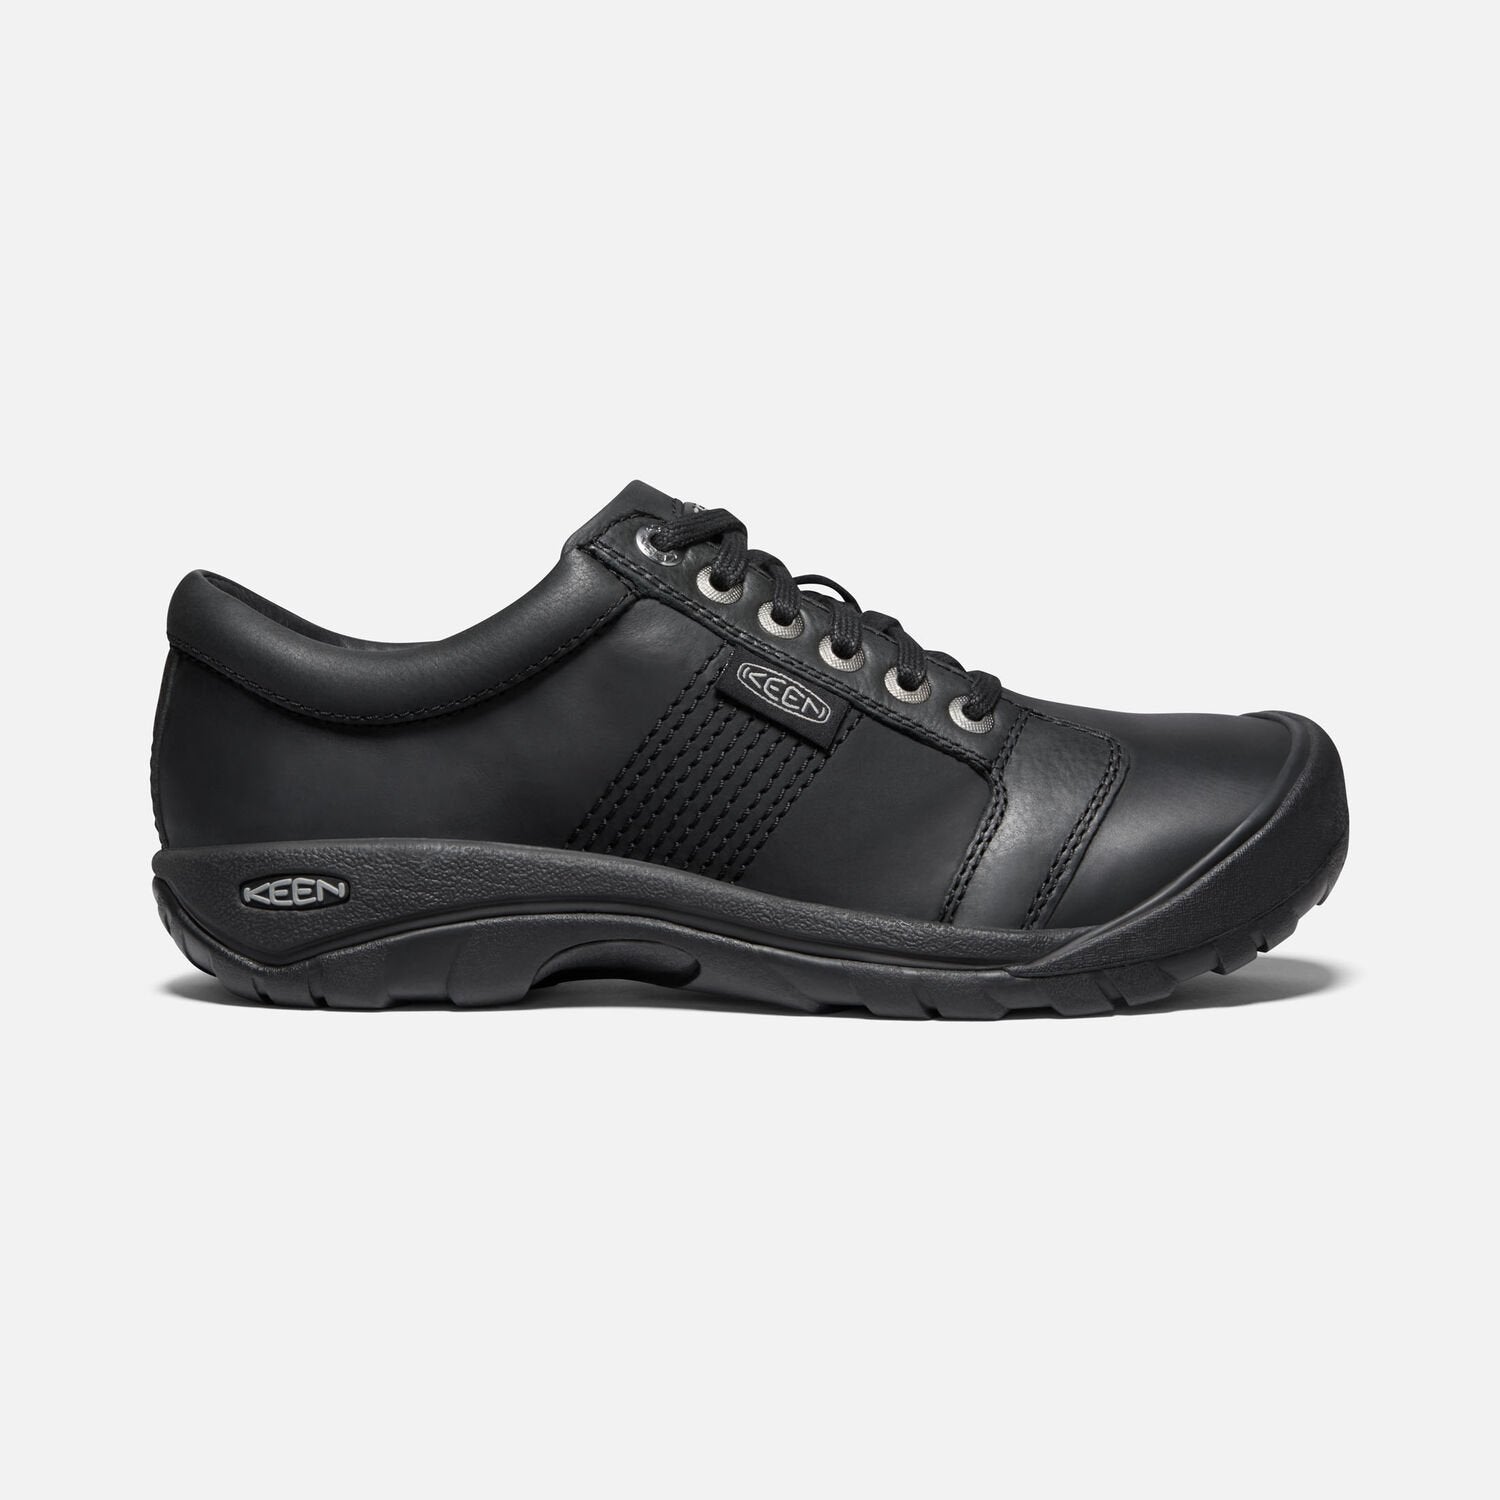 KEEN Men's Brixen Low Waterproof Slip On Shoe, Black/Gargoyle, 7 D